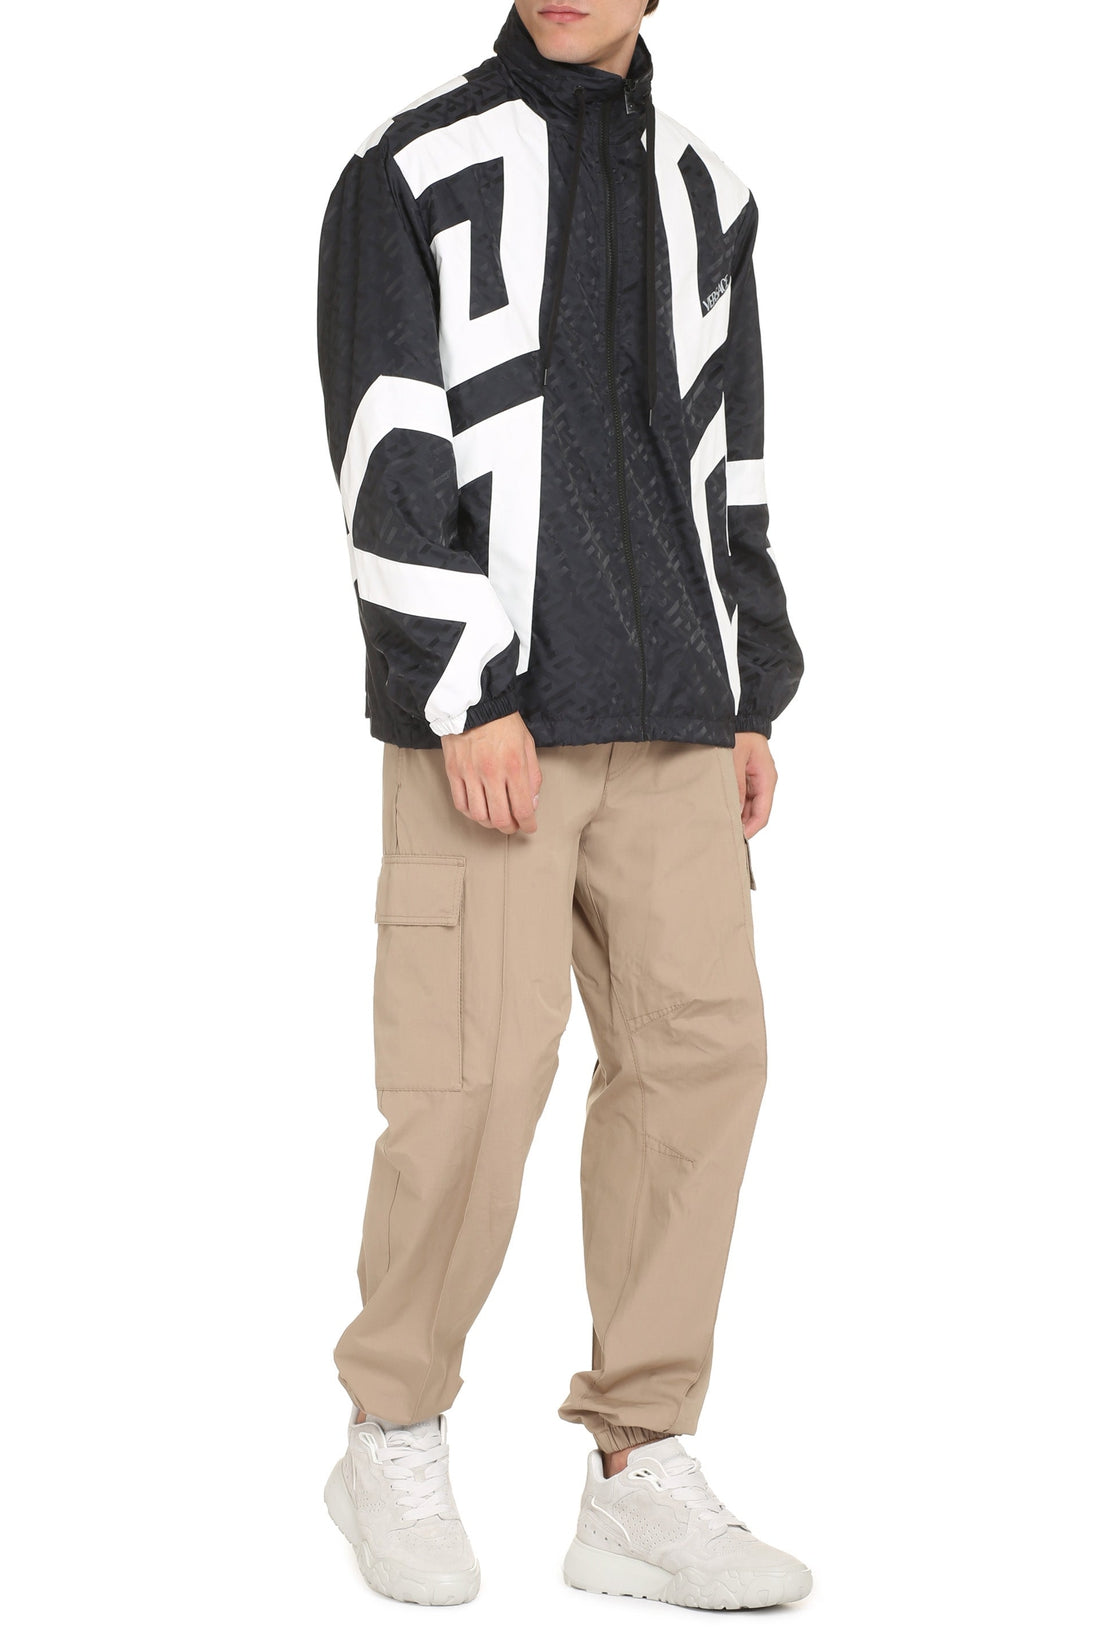 Versace-OUTLET-SALE-Windbreaker jacket-ARCHIVIST